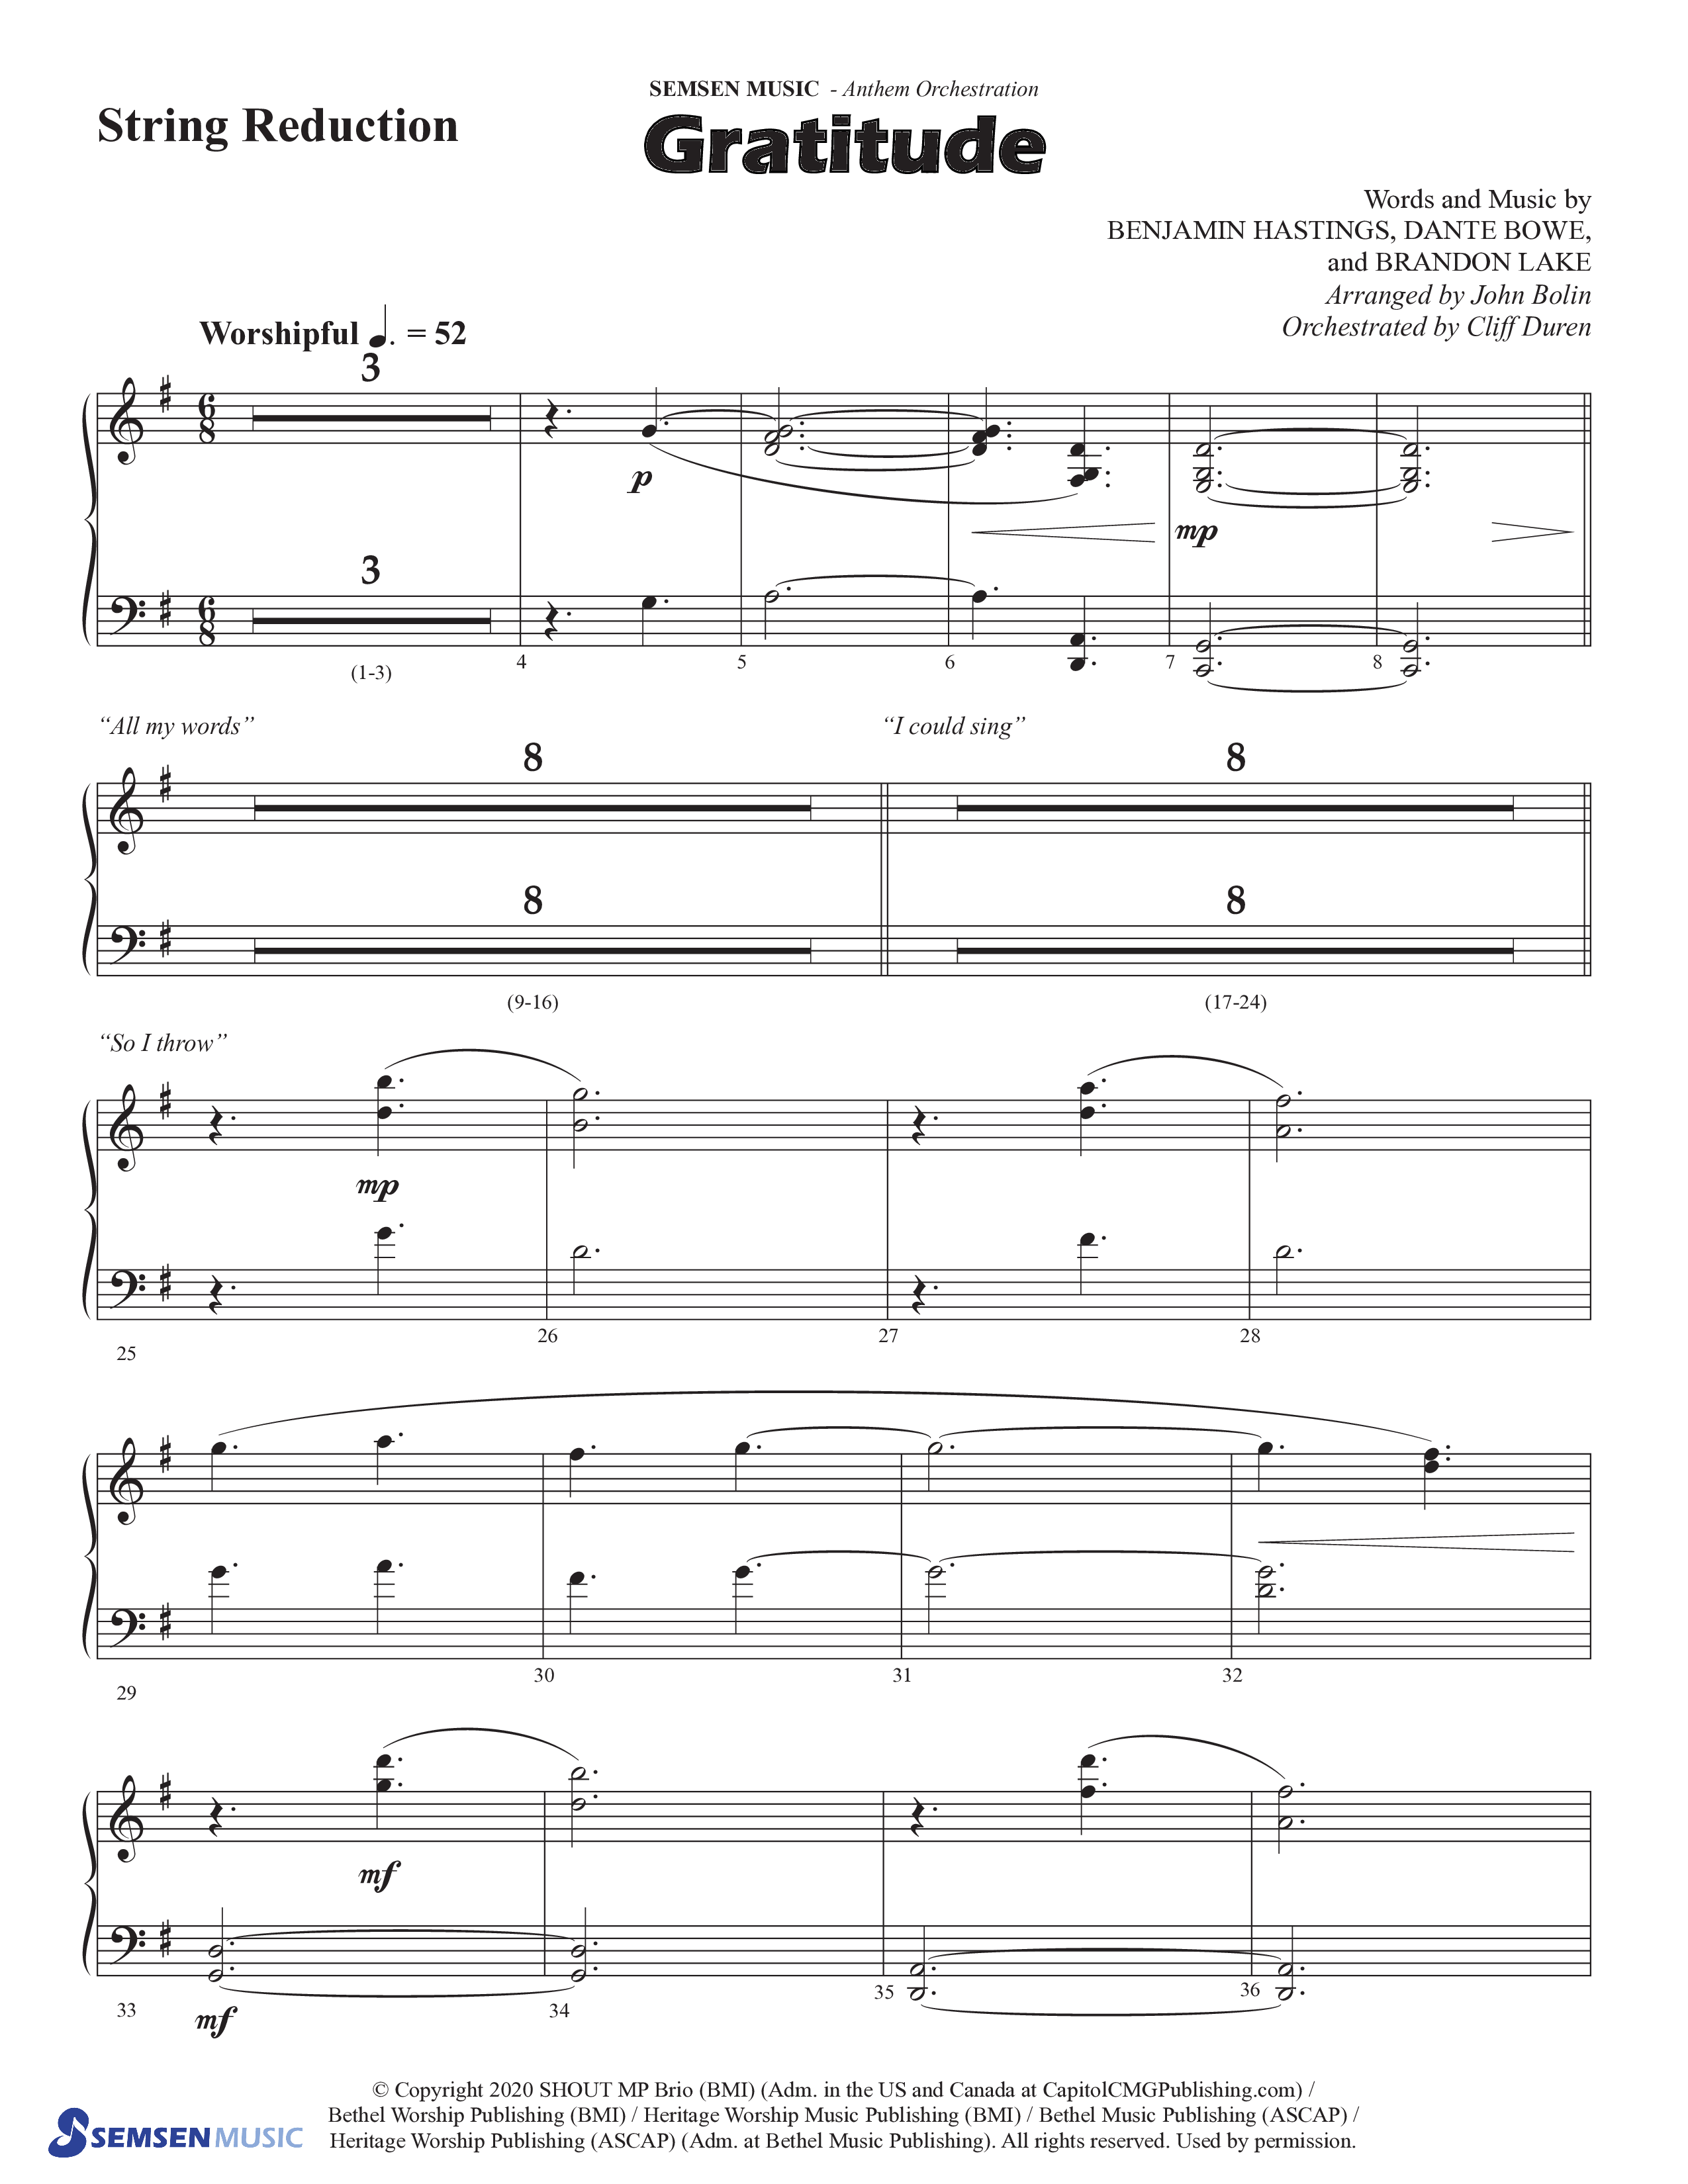 Gratitude (Choral Anthem SATB) String Reduction (Semsen Music / Arr. John Bolin / Orch. Cliff Duren)